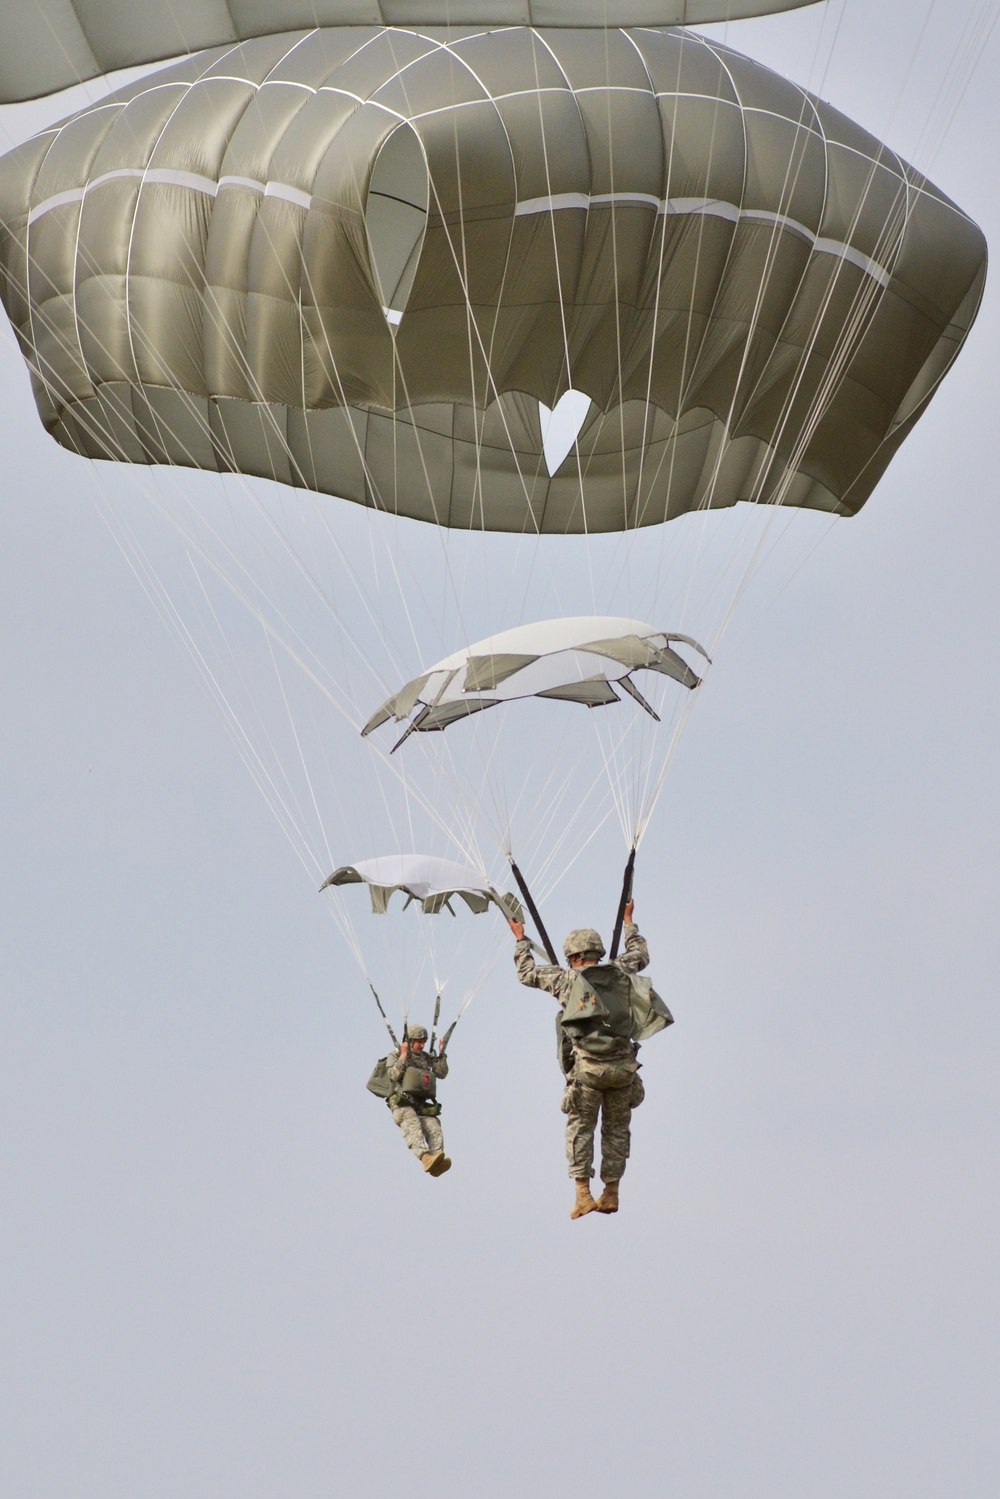 173rd Airborne Brigade NATO-partnered airborne operations